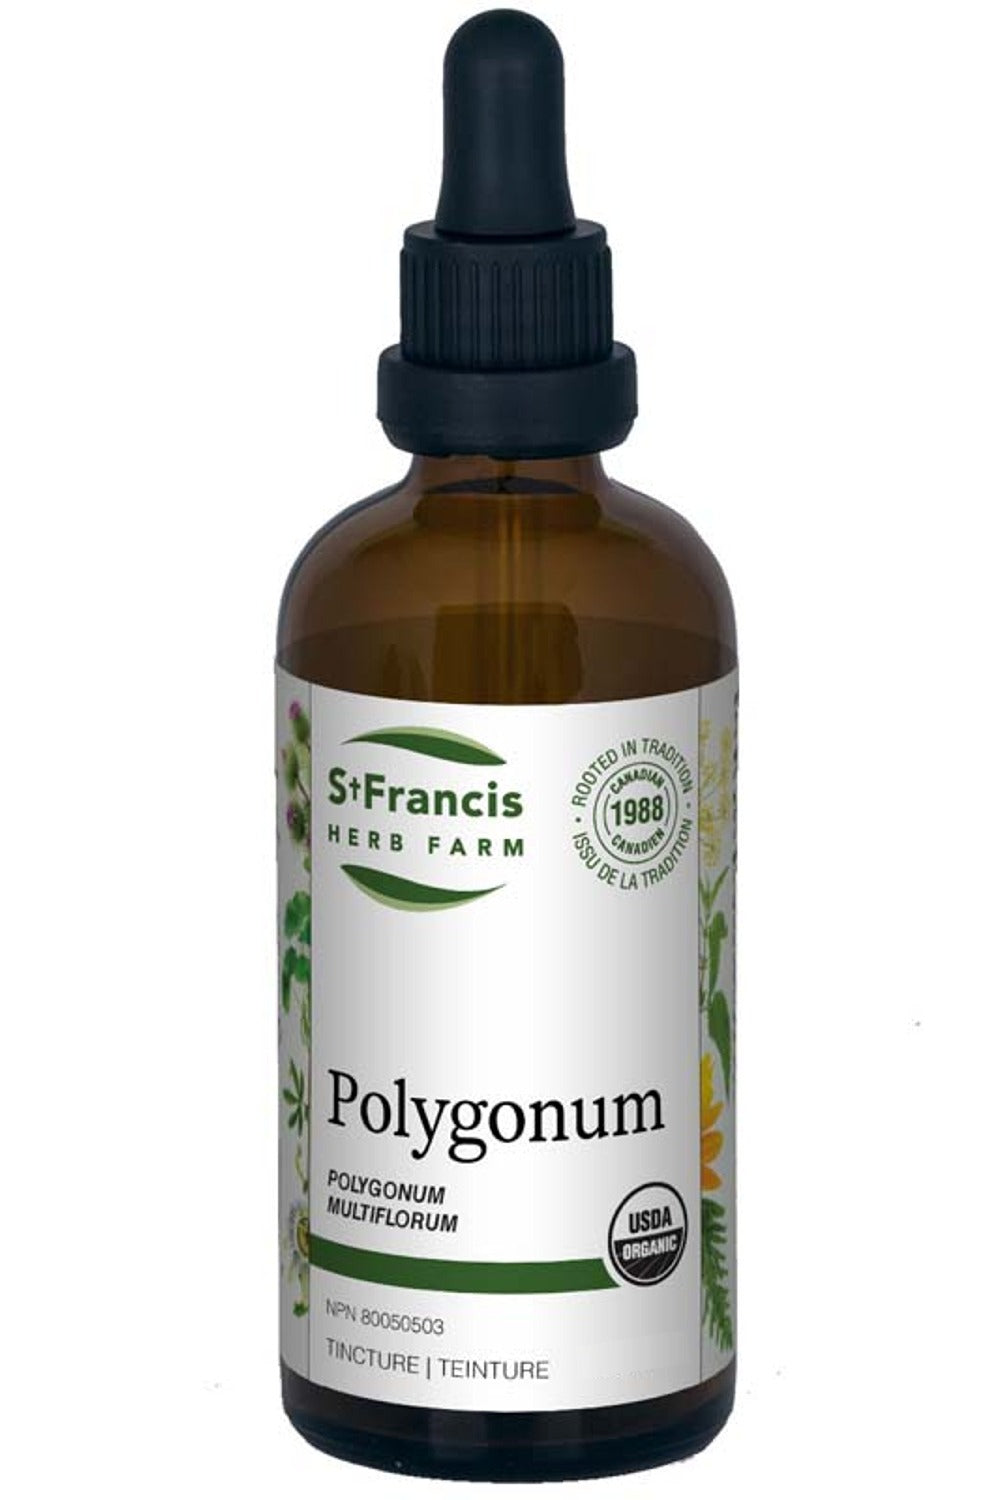 ST FRANCIS HERB FARM Polygonum (50 ml)